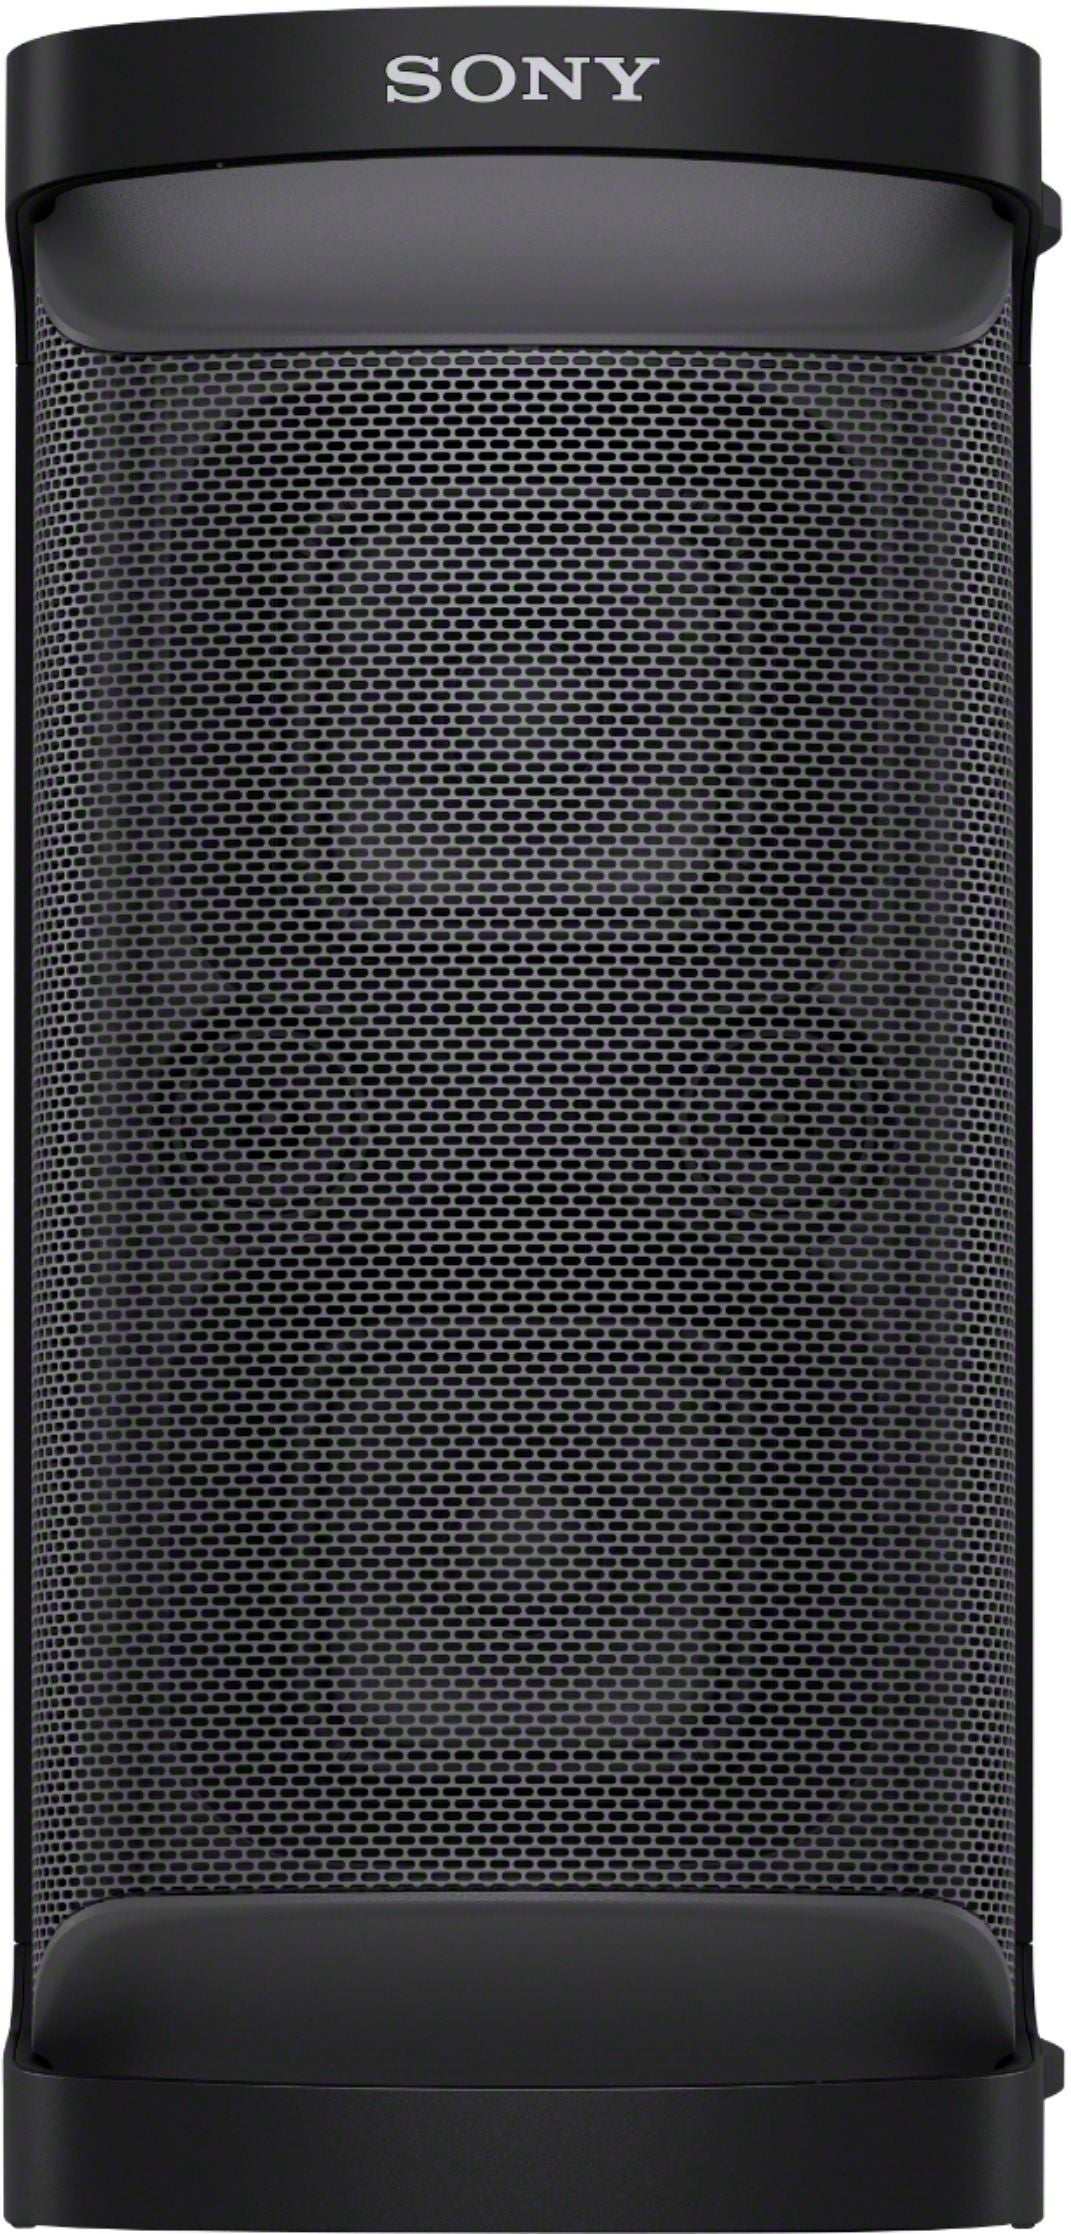 Sony - Portable Bluetooth Speaker - Black_2